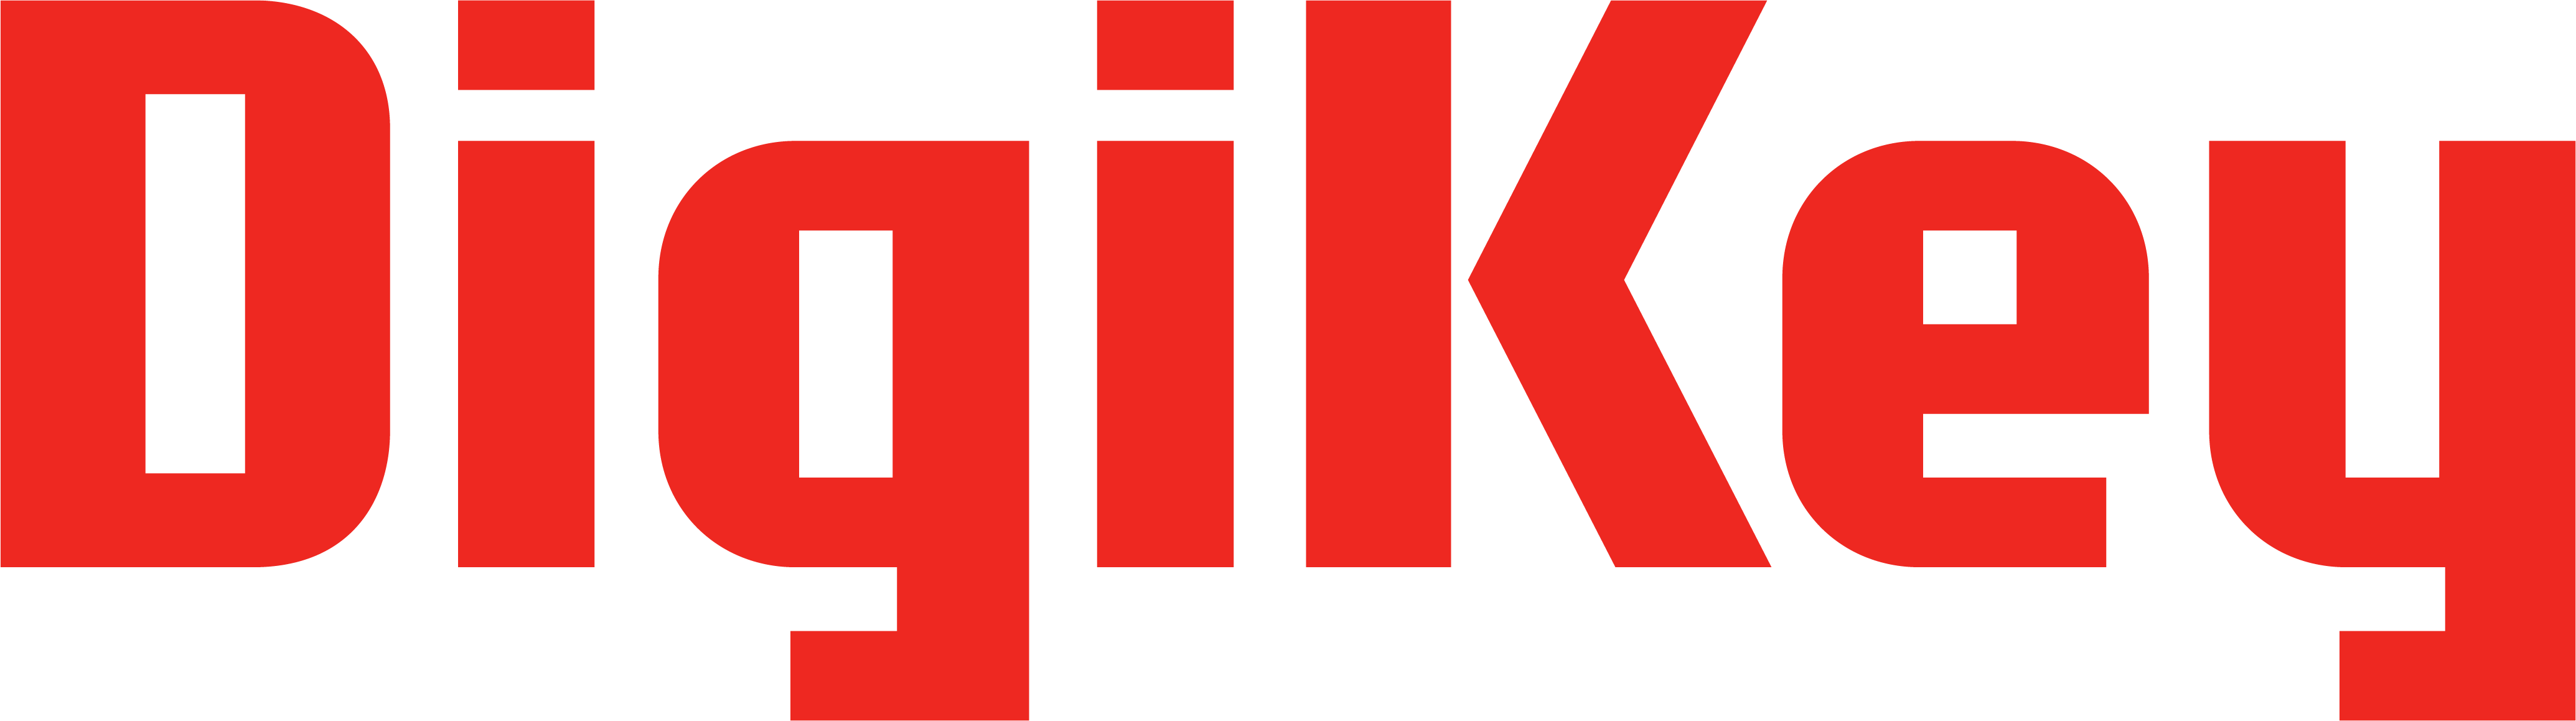 Digi-Key Logo